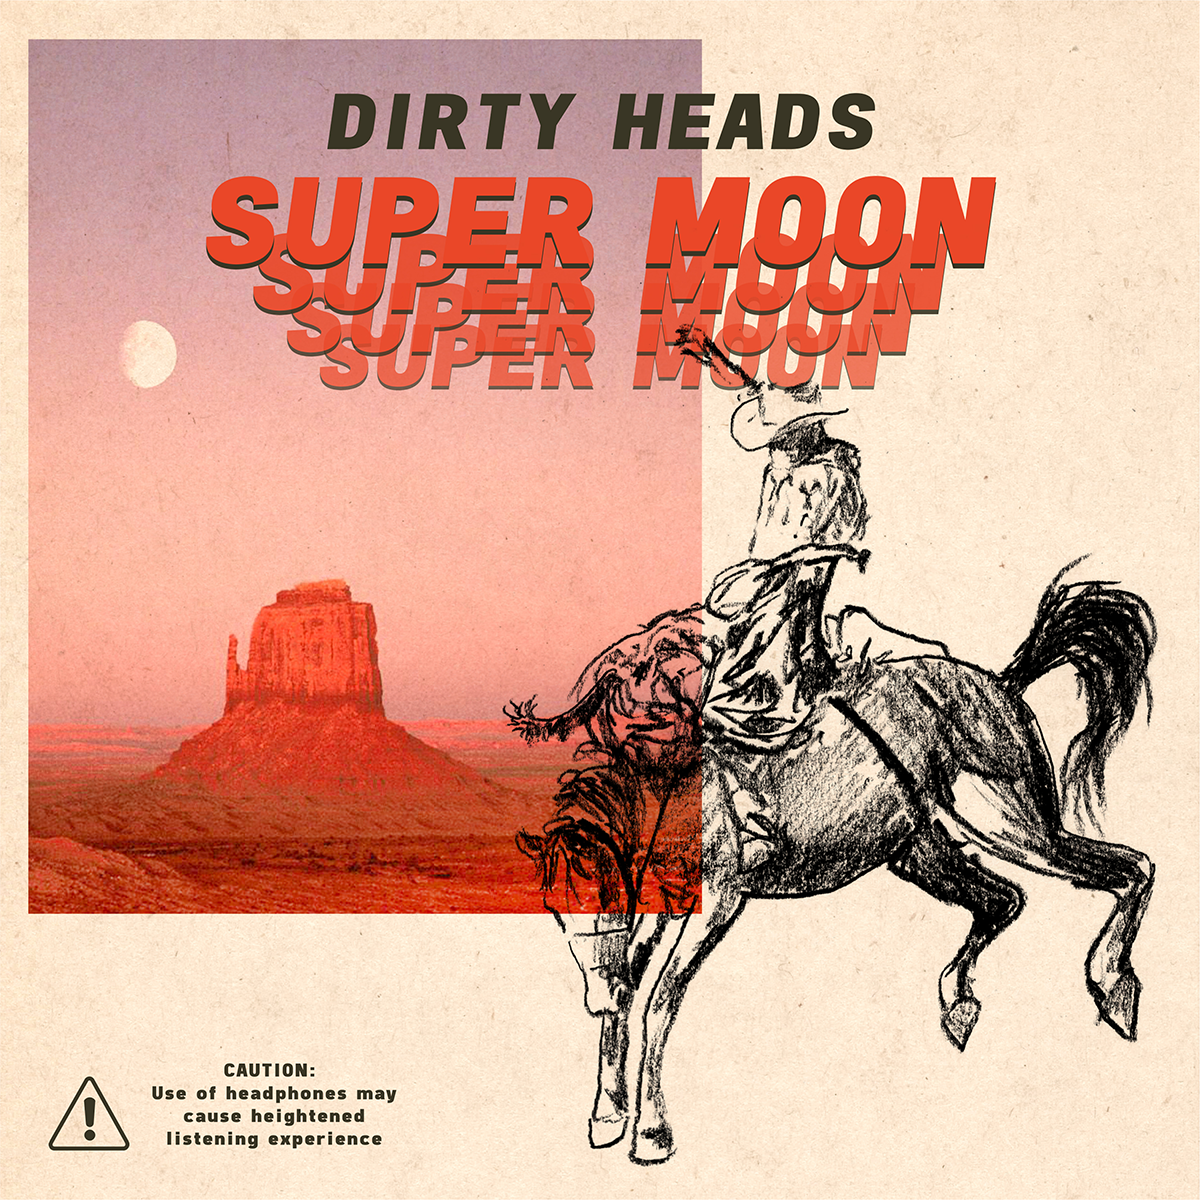 The Dirty Heads' Supermoon